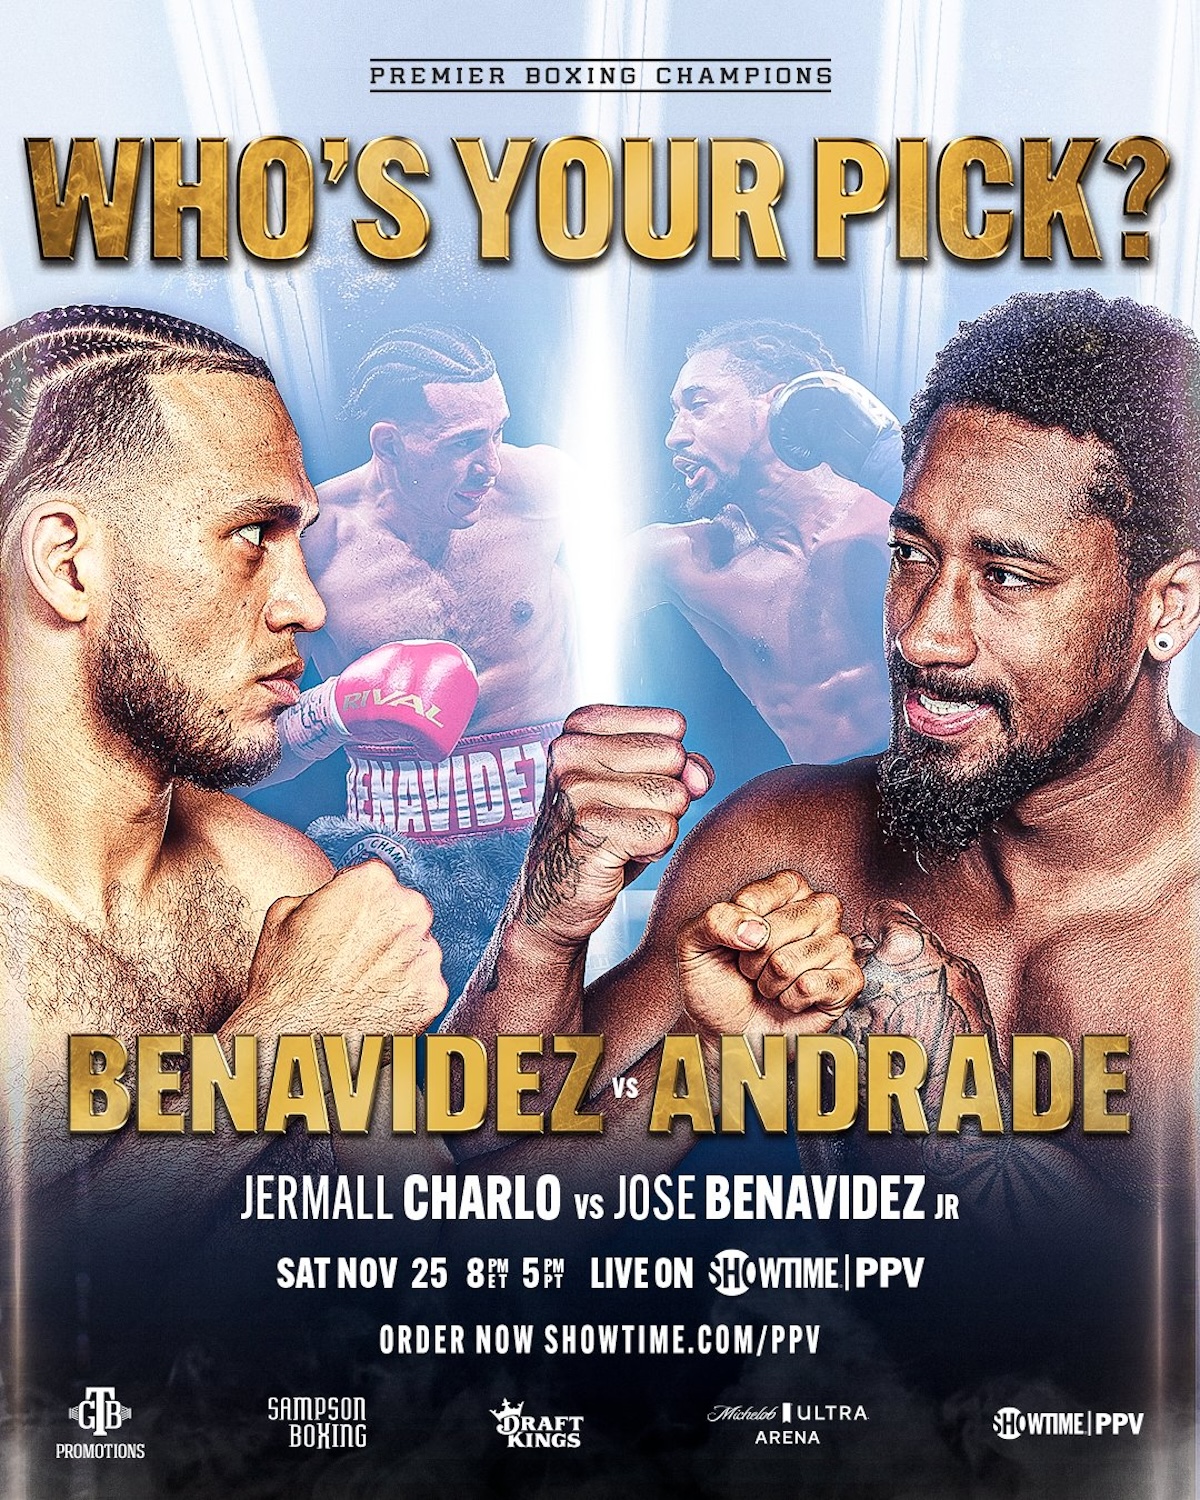 David Benavidez vs Demetrius Andrade: How to watch?